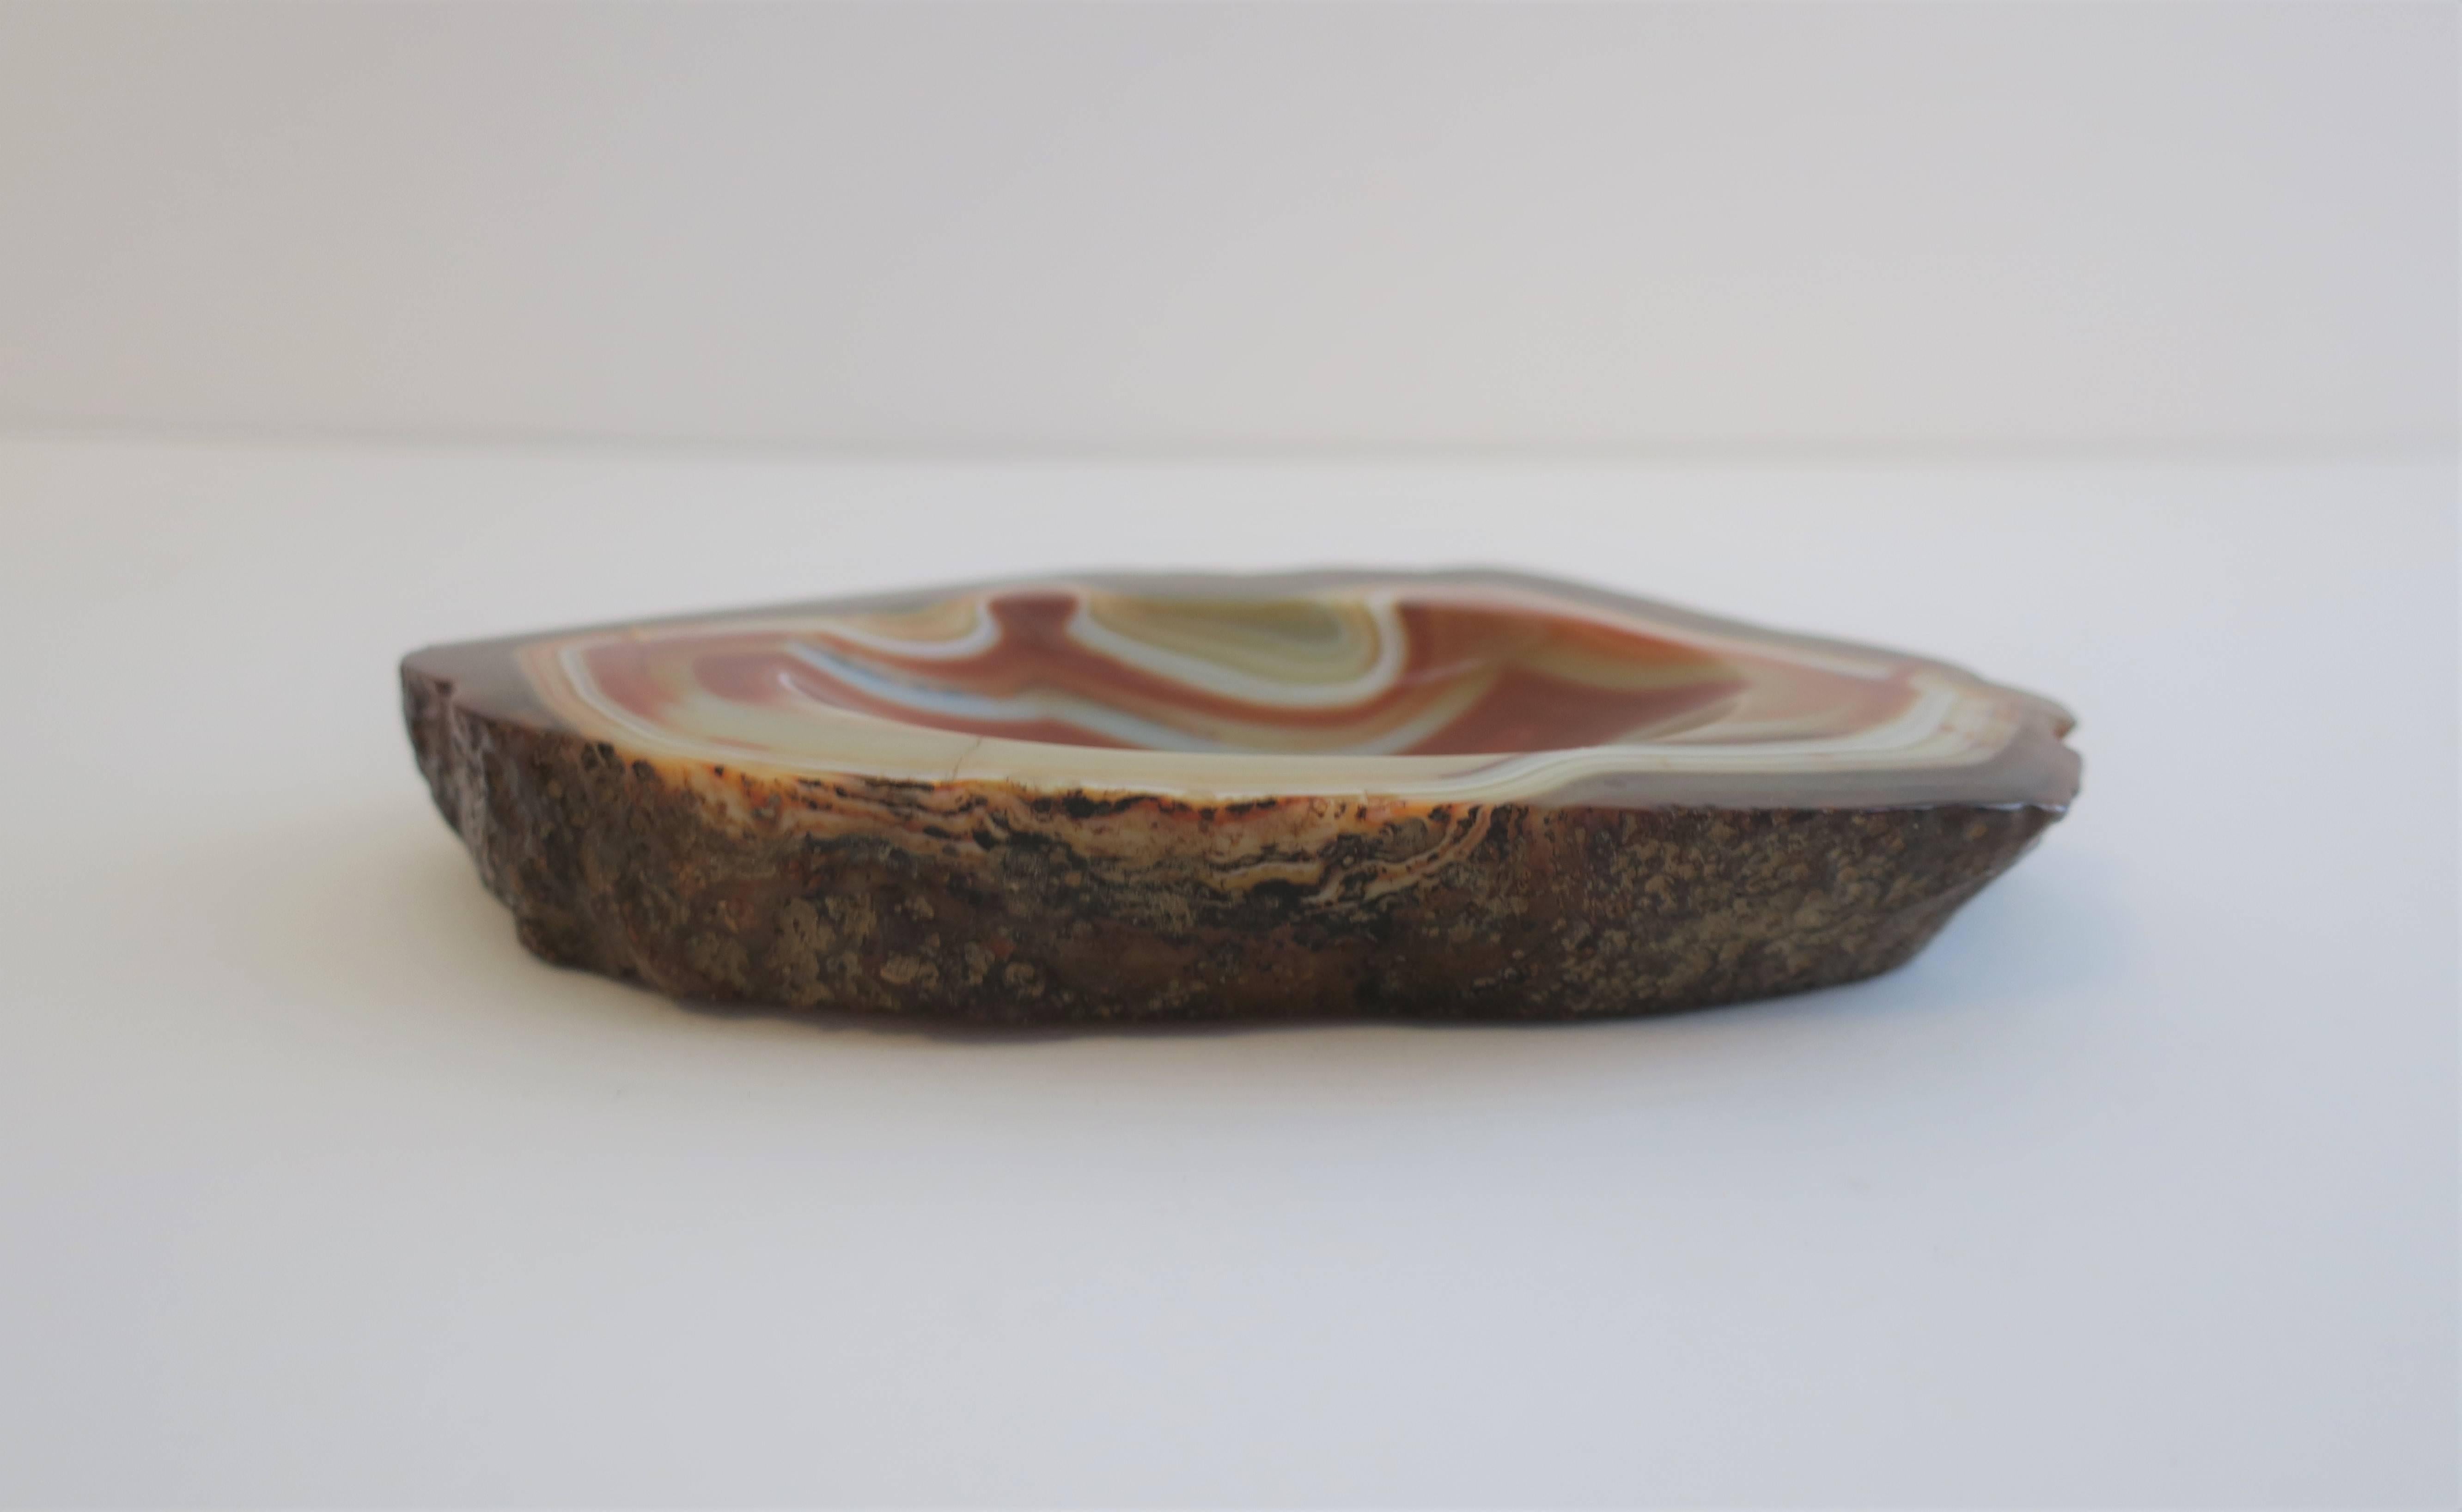 Organic Modern White and Orange Agate Onyx Vessel Bowl or Decorative Object